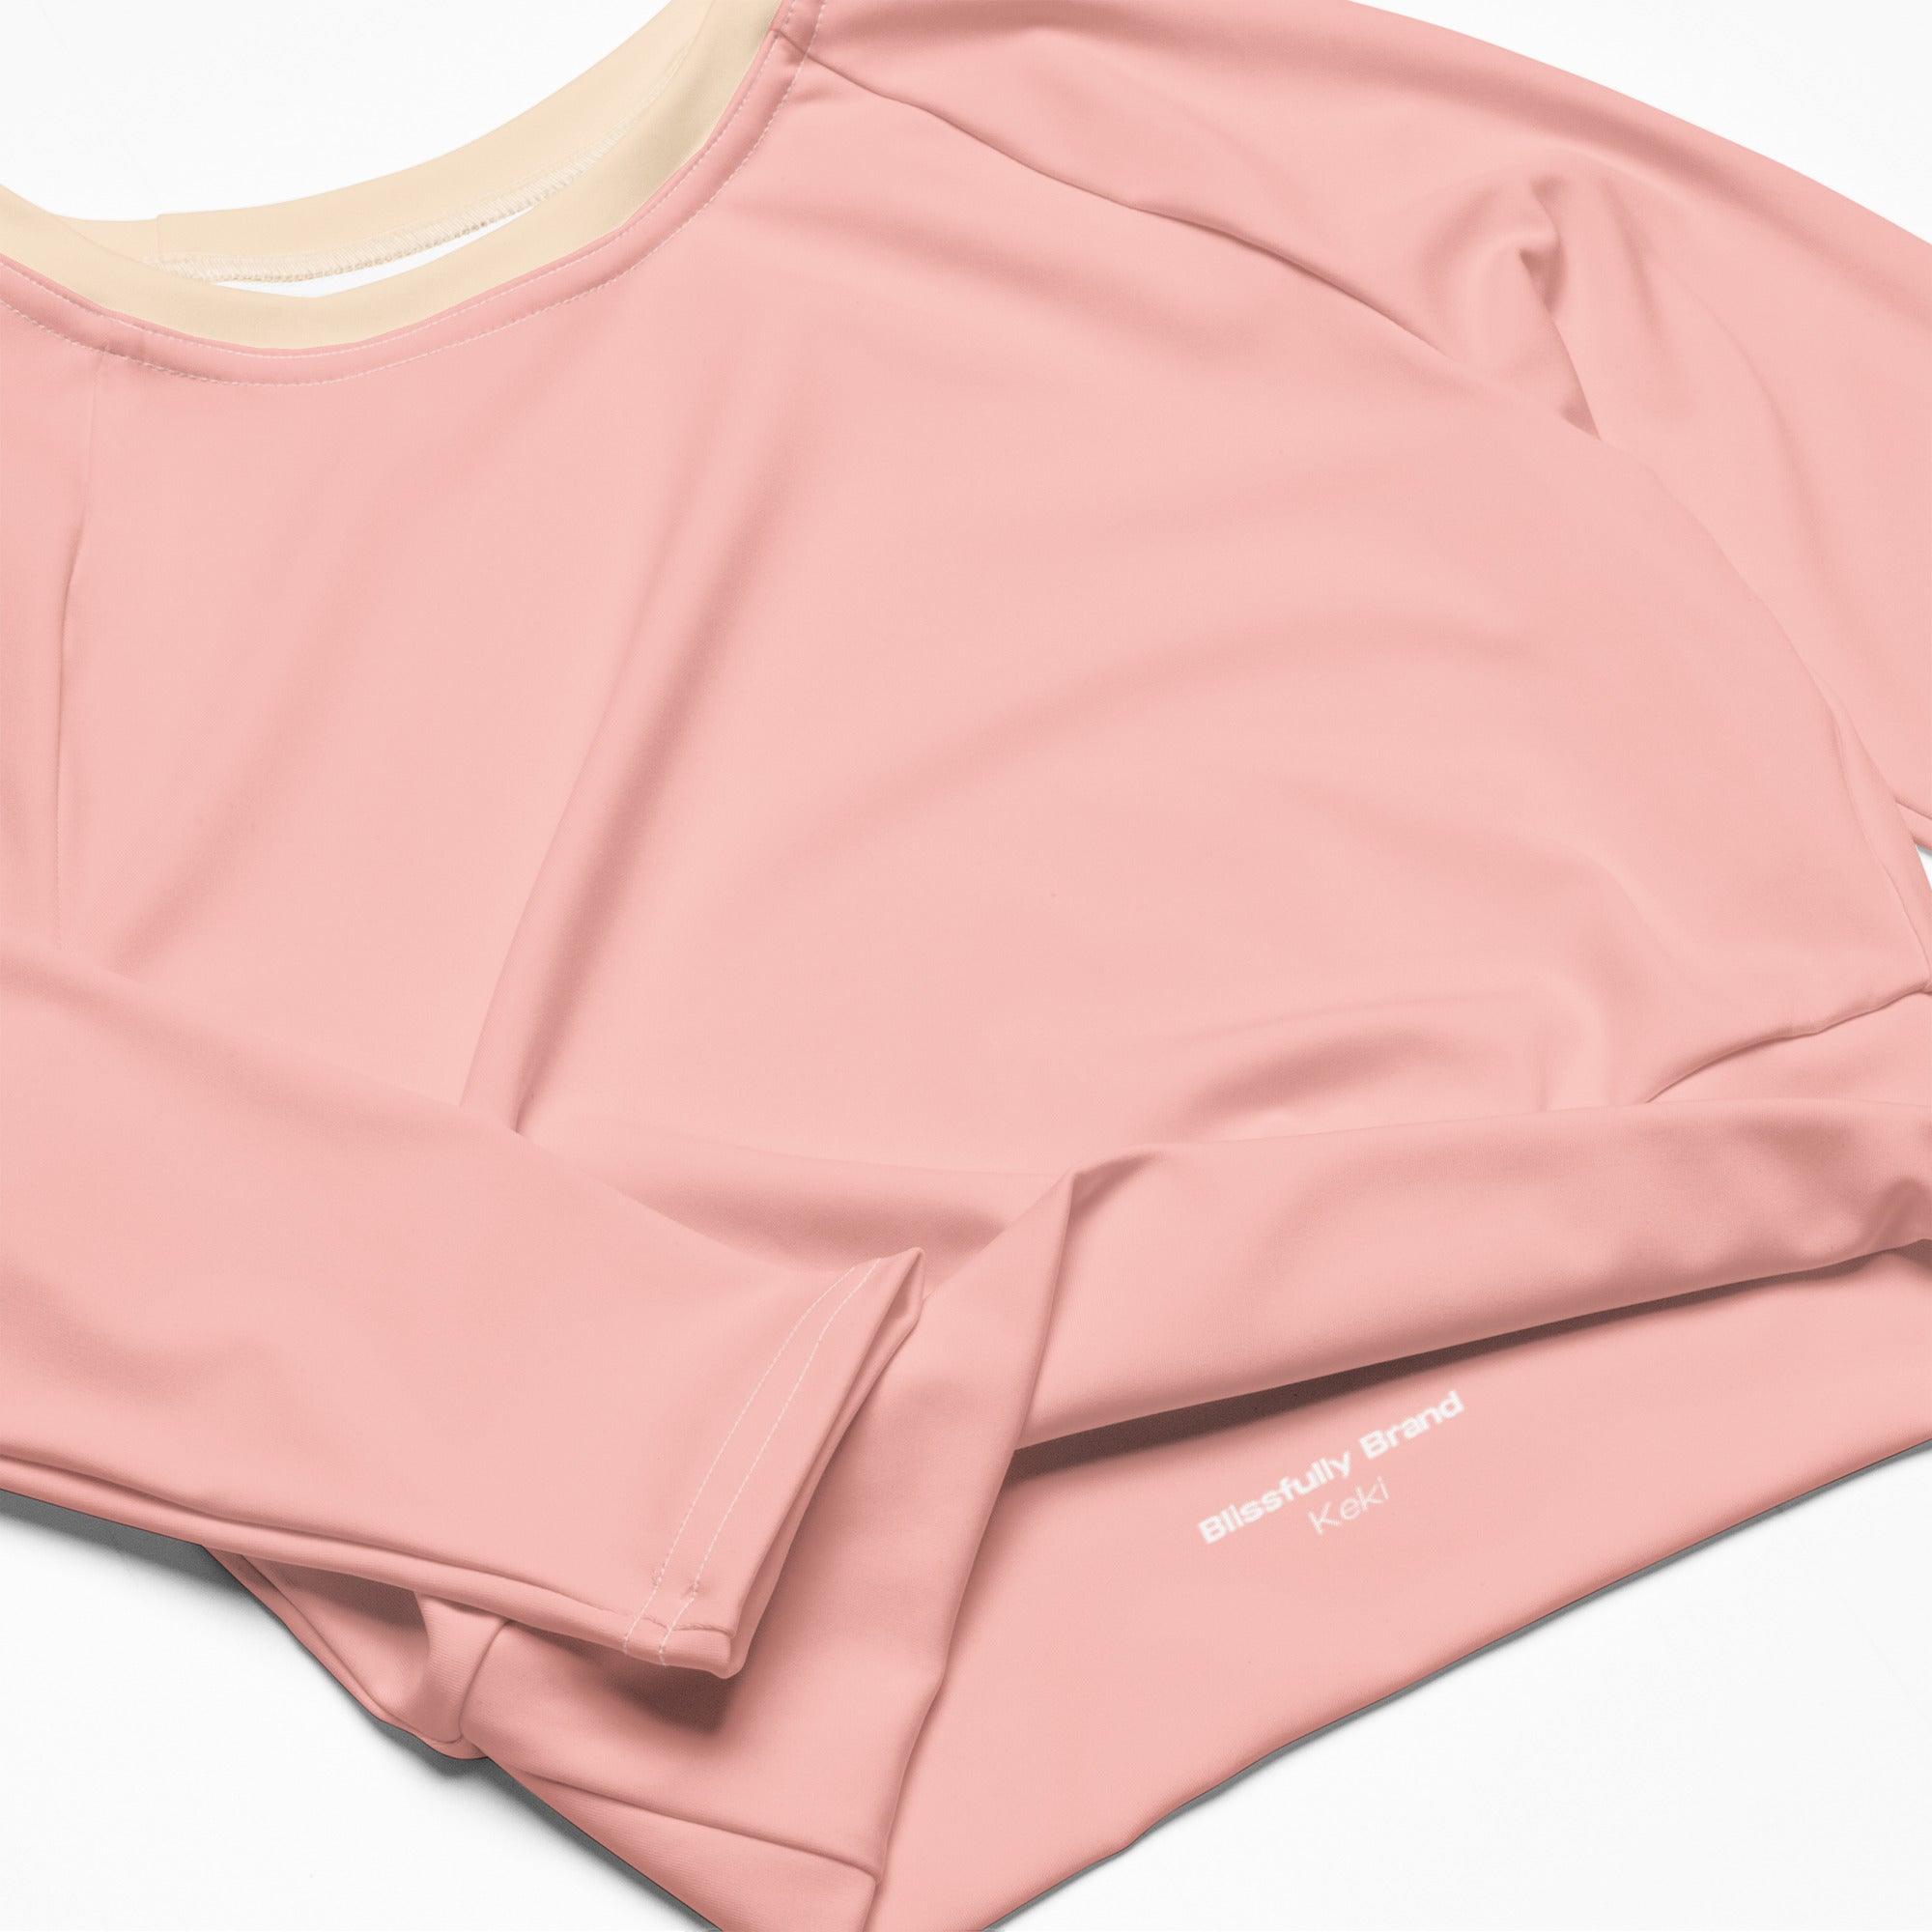 Keki Pink Active Long Sleeve Crop Top - Blissfully Brand